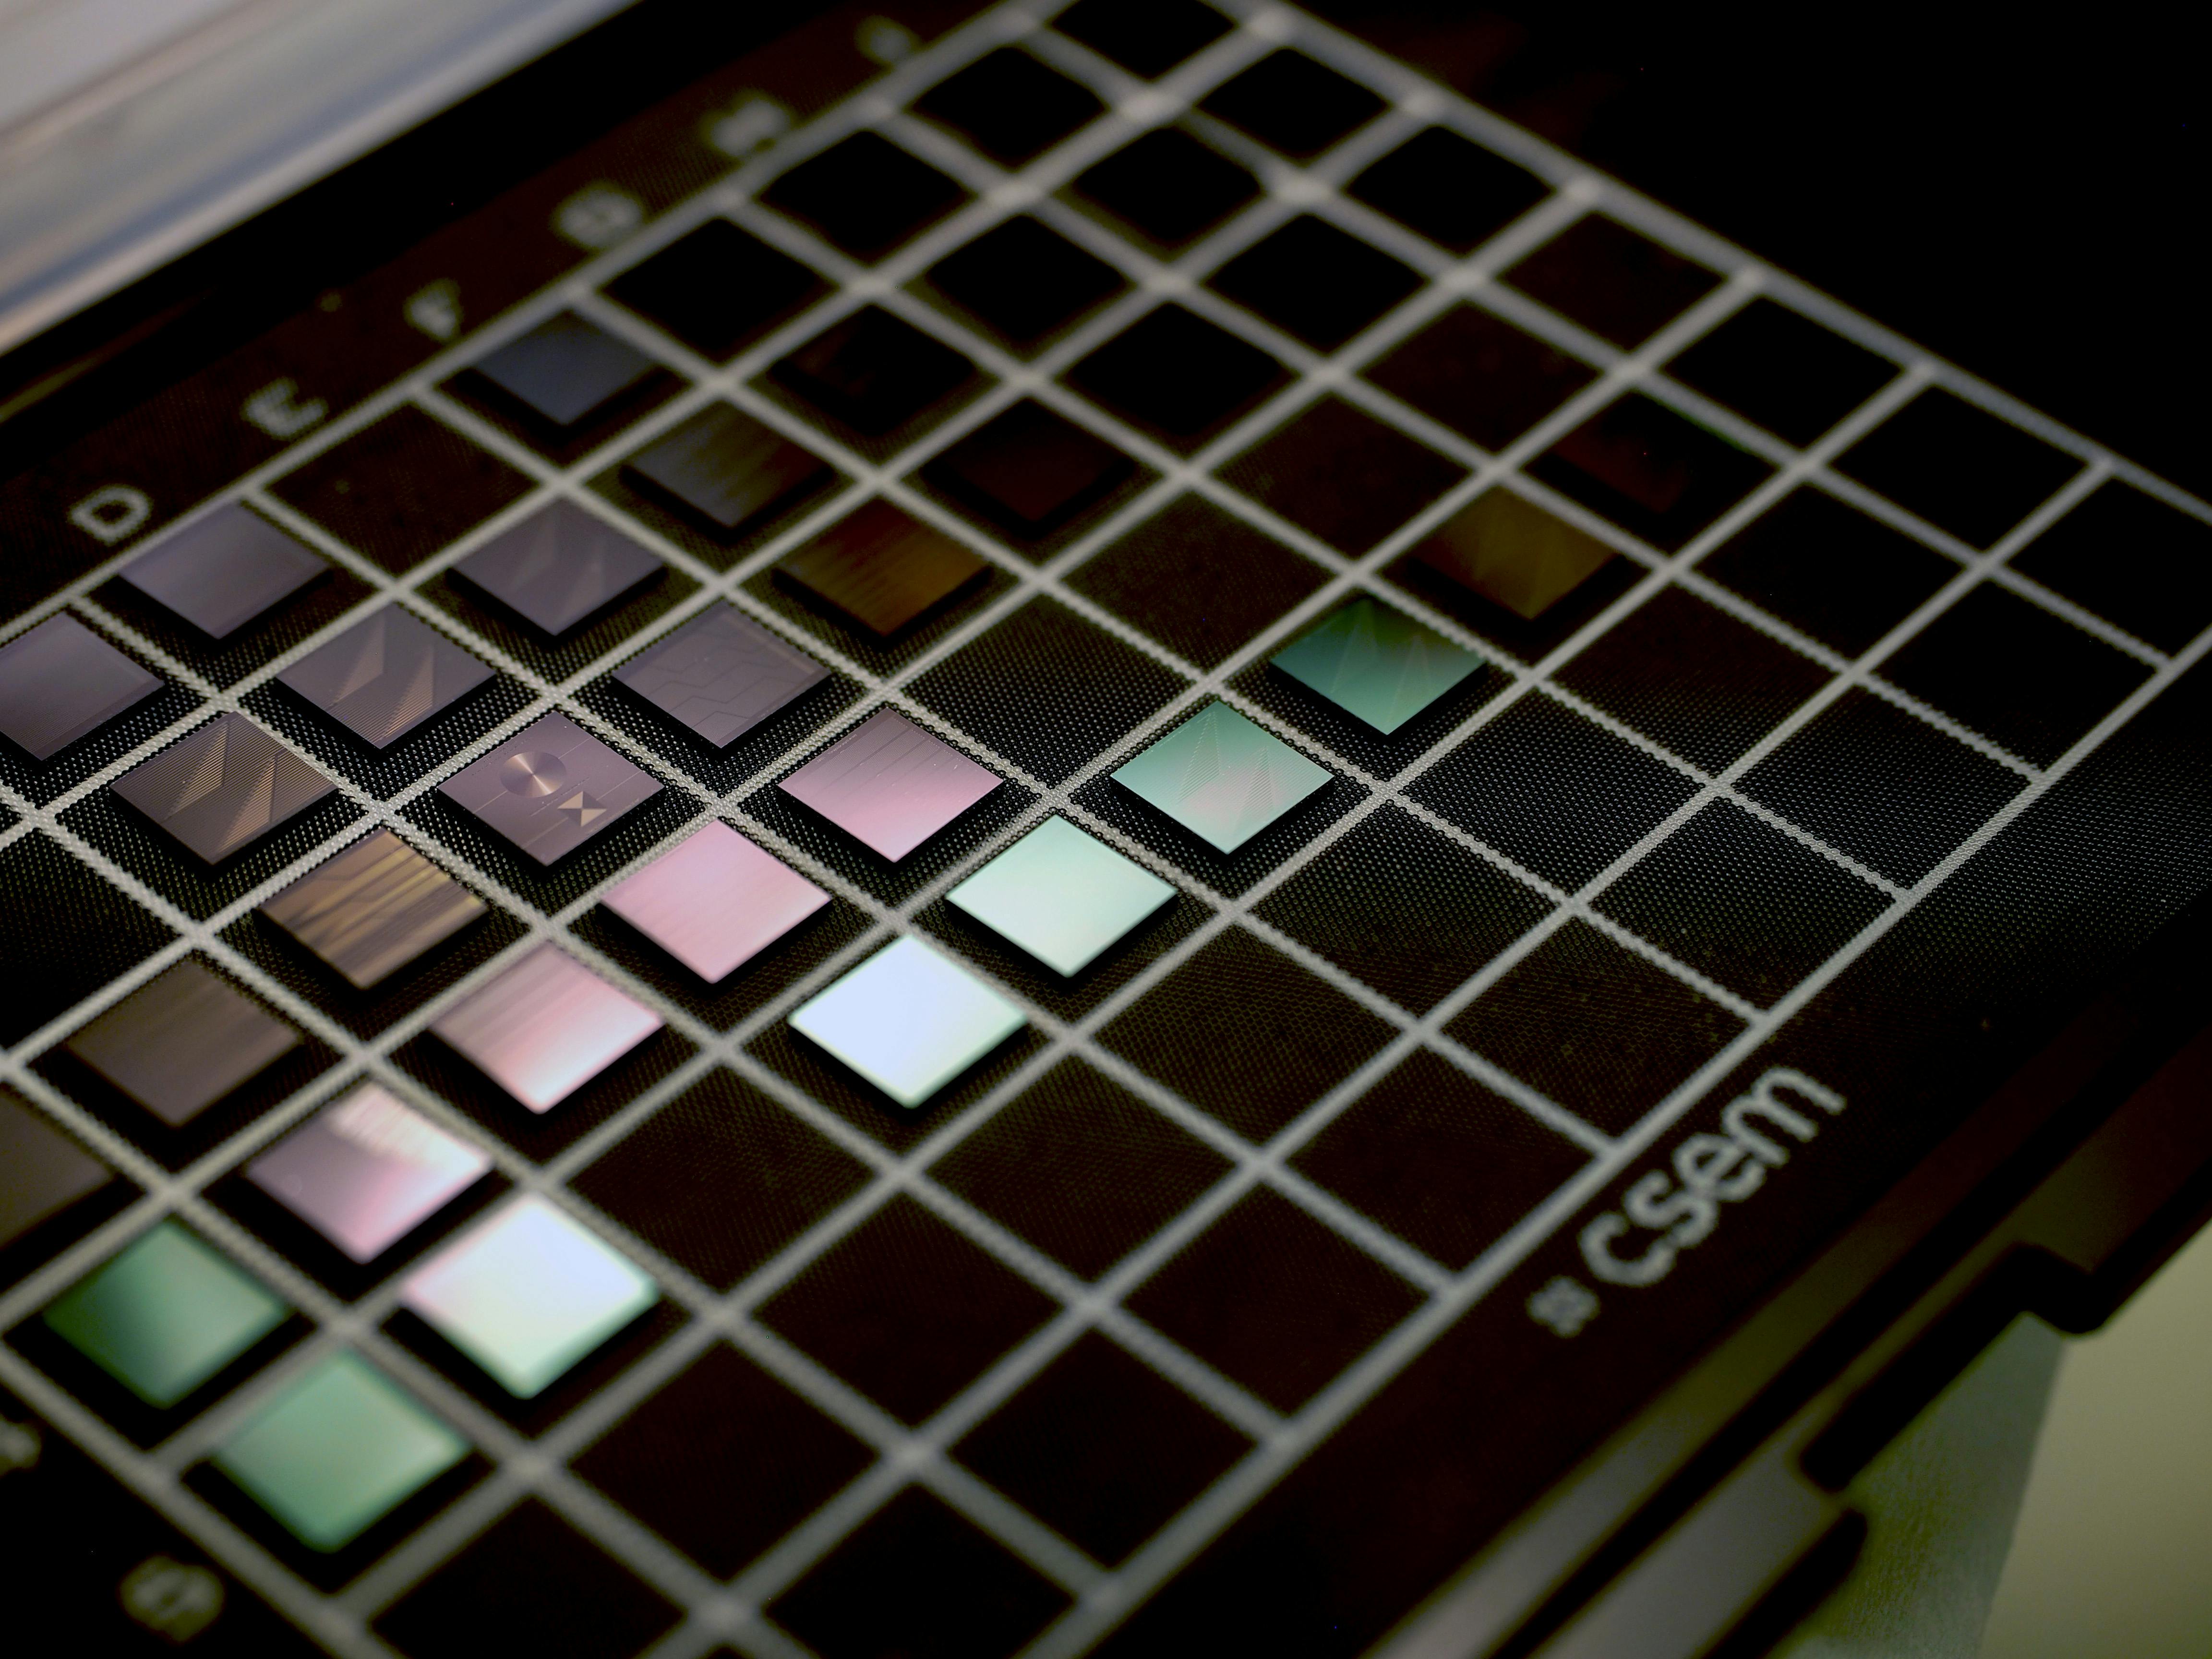 Multiple 5x5 mm² chips fabricated on CSEM's lithium niobate on insulator (LNOI) PIC platform.